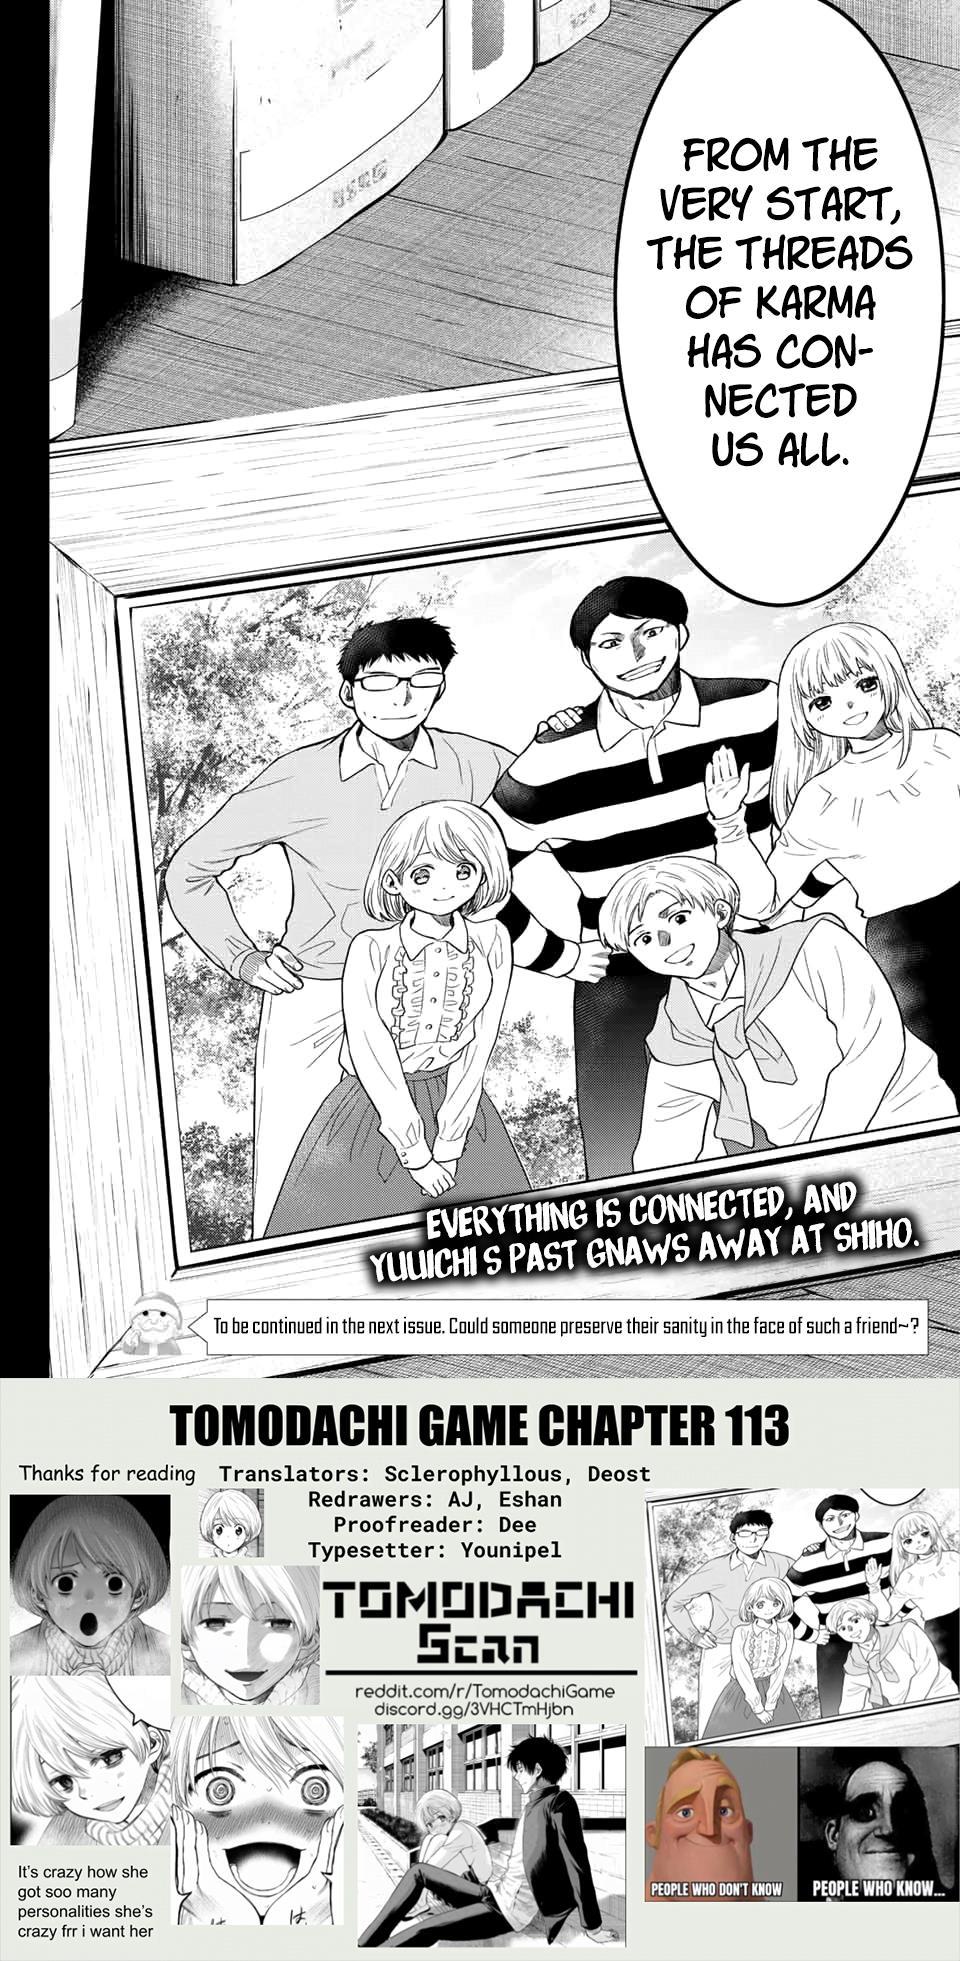 Tomodachi Game, Chapter 113 - Tomodachi GAME MANGA Online